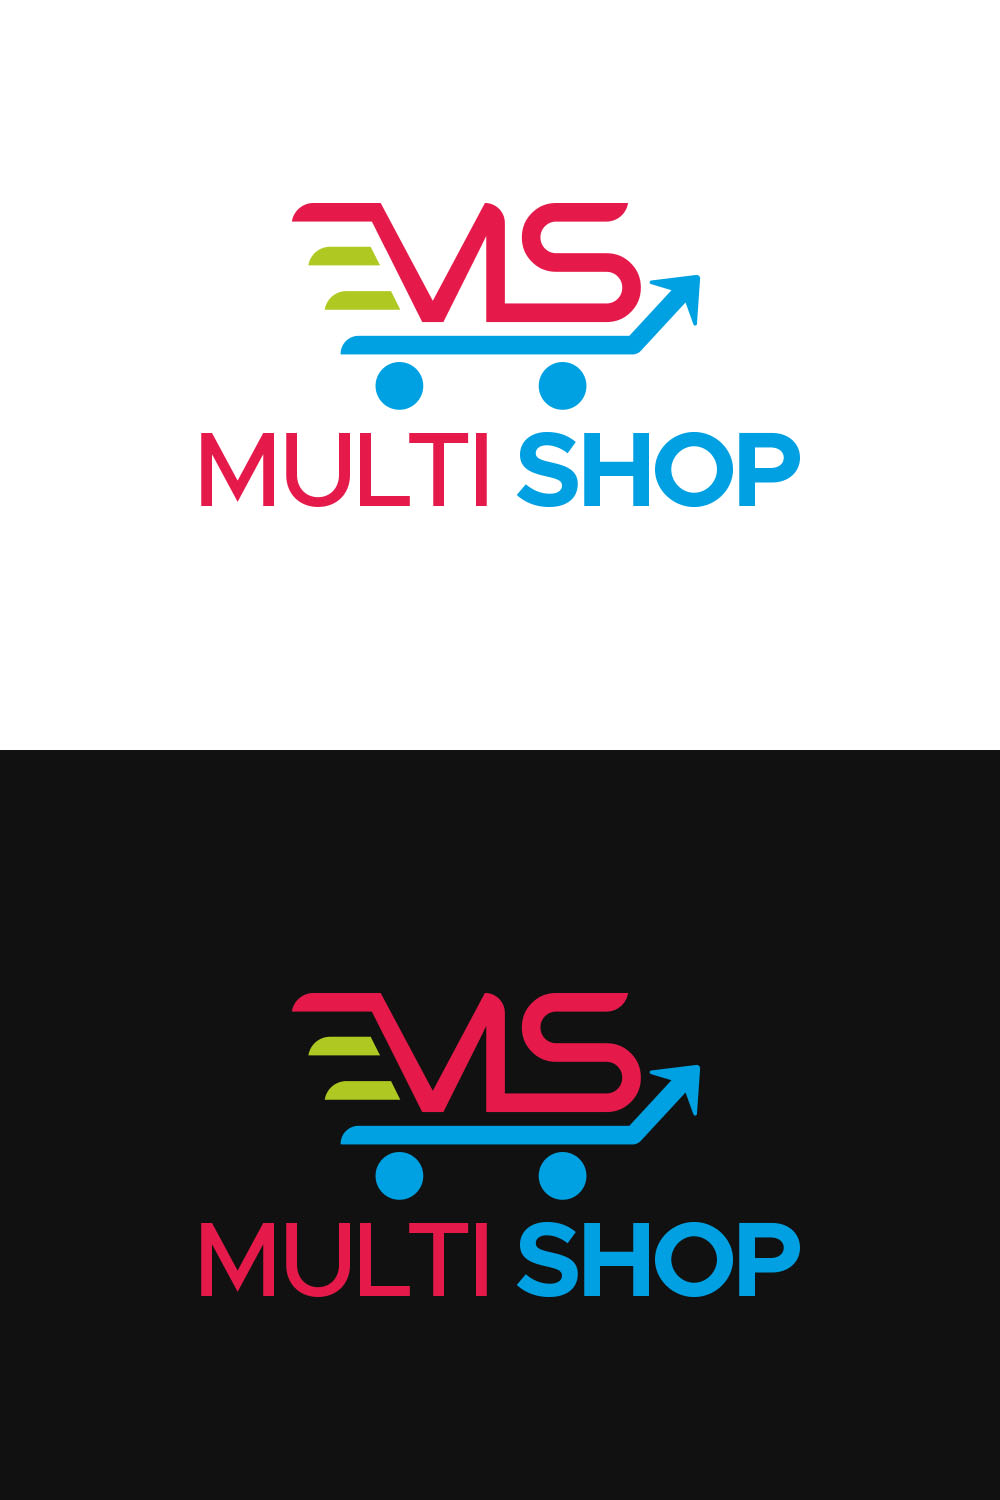 MS Letter logo design template pinterest preview image.